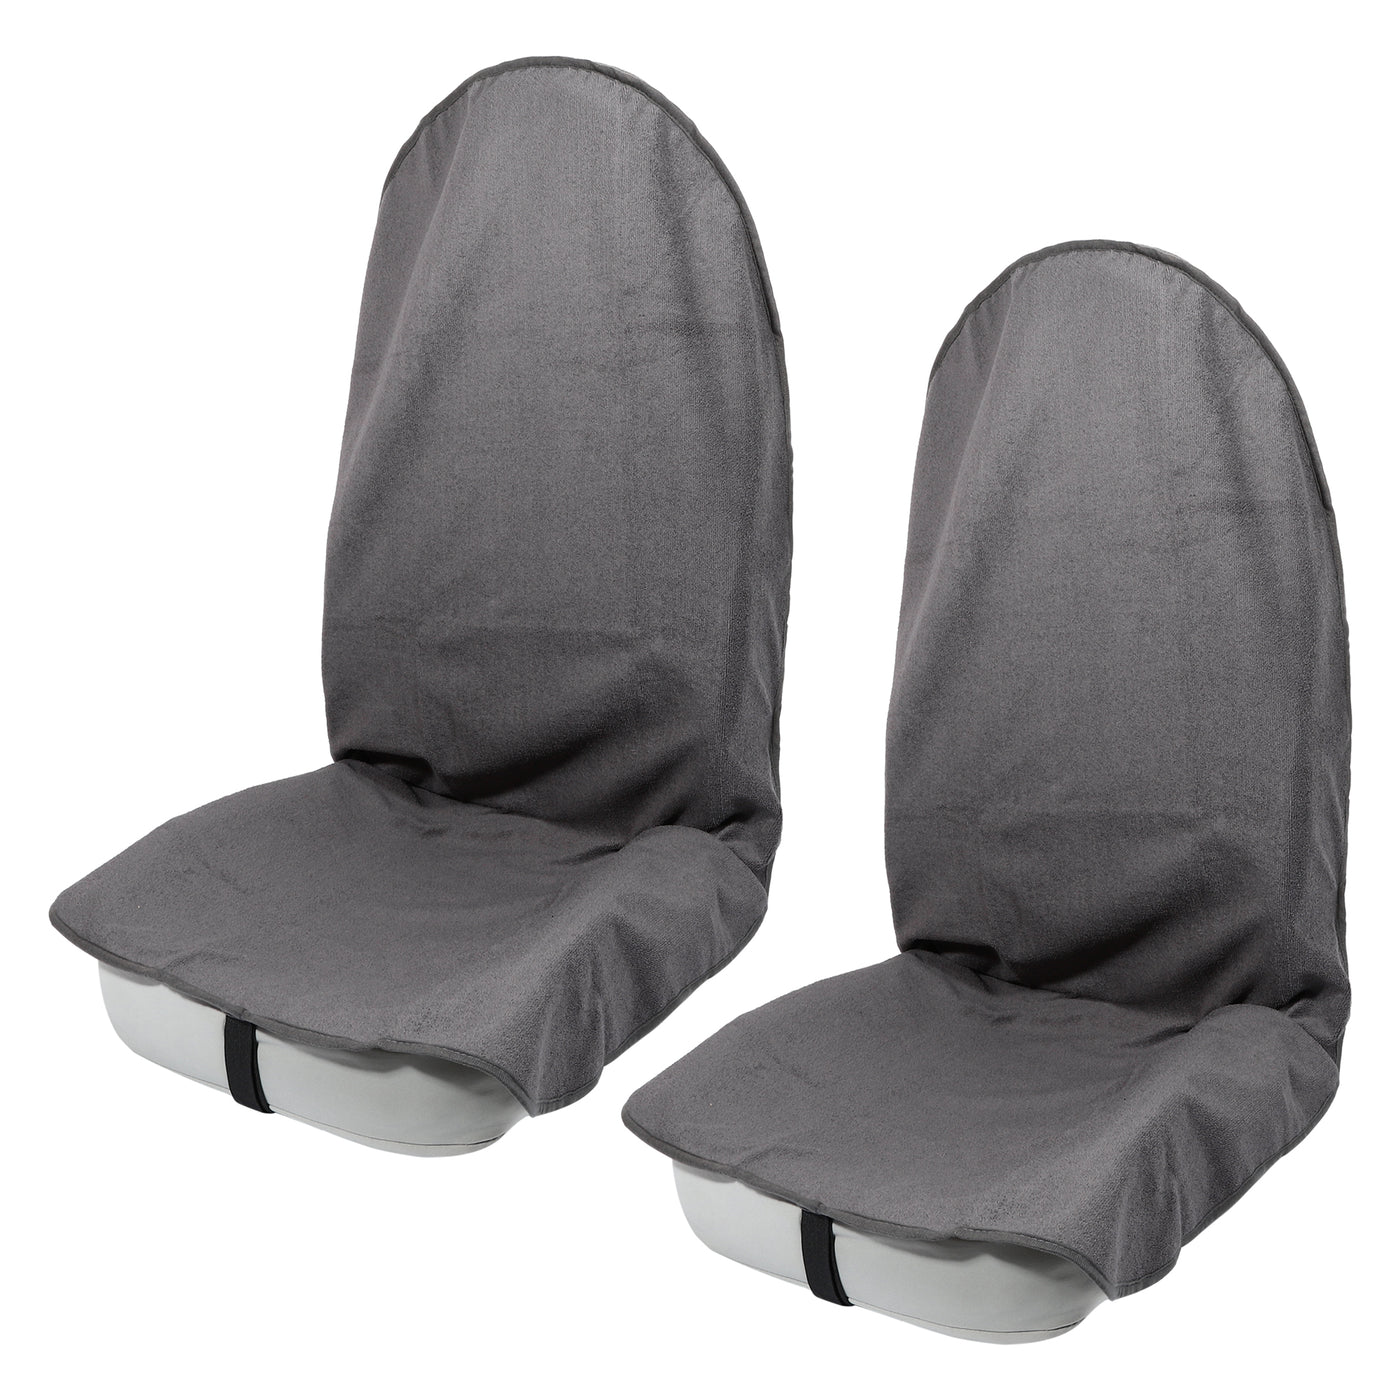 X AUTOHAUX 2pcs Gray Universal Car Seat Cover Anti-Slip Towel Seat Protector Pad for Car Trucks SUV